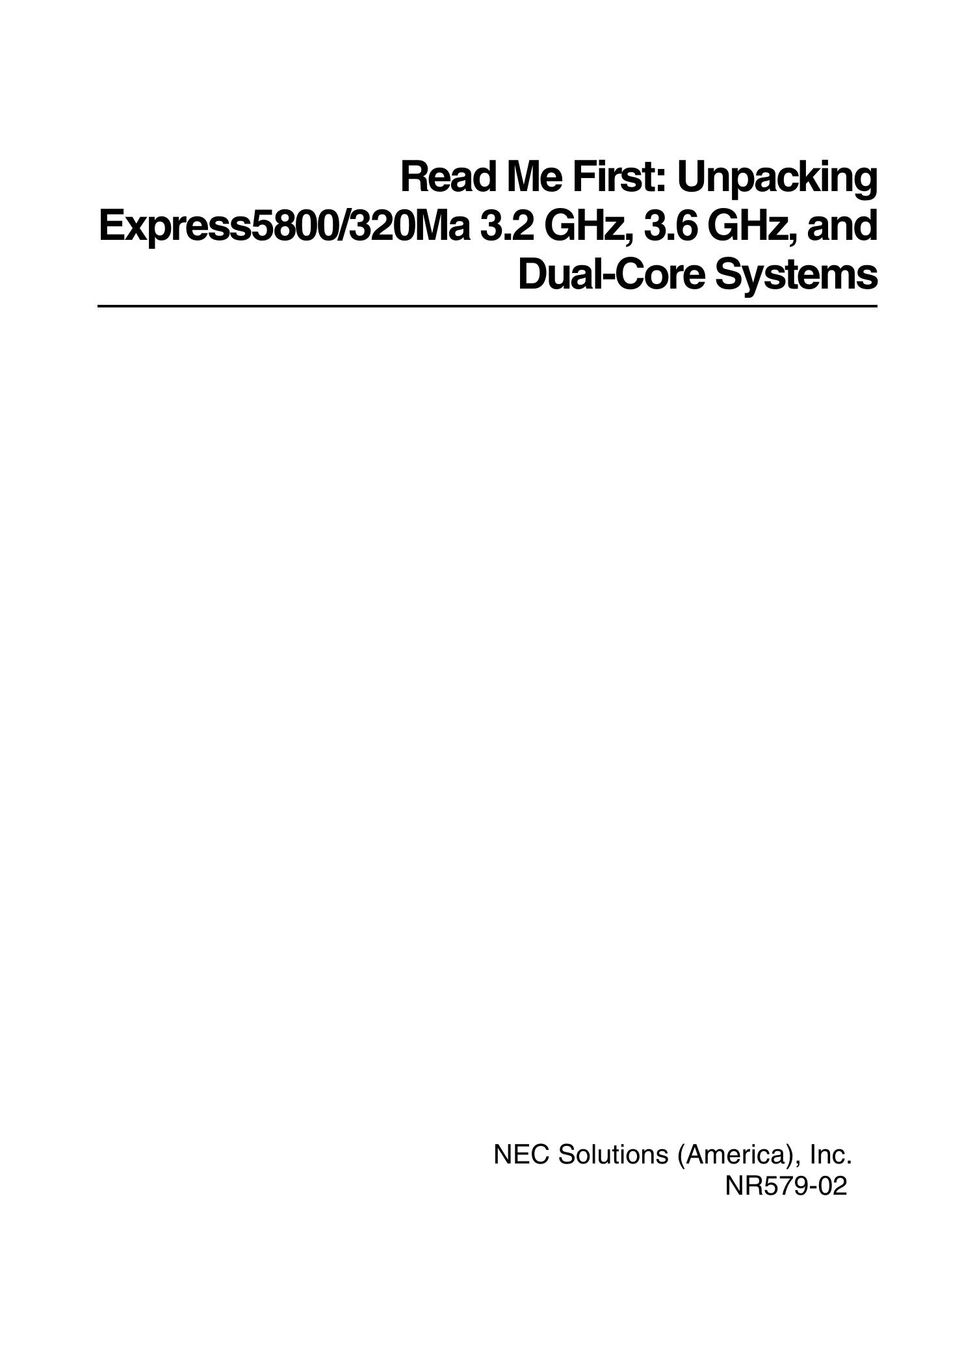 NEC 320Ma Server User Manual